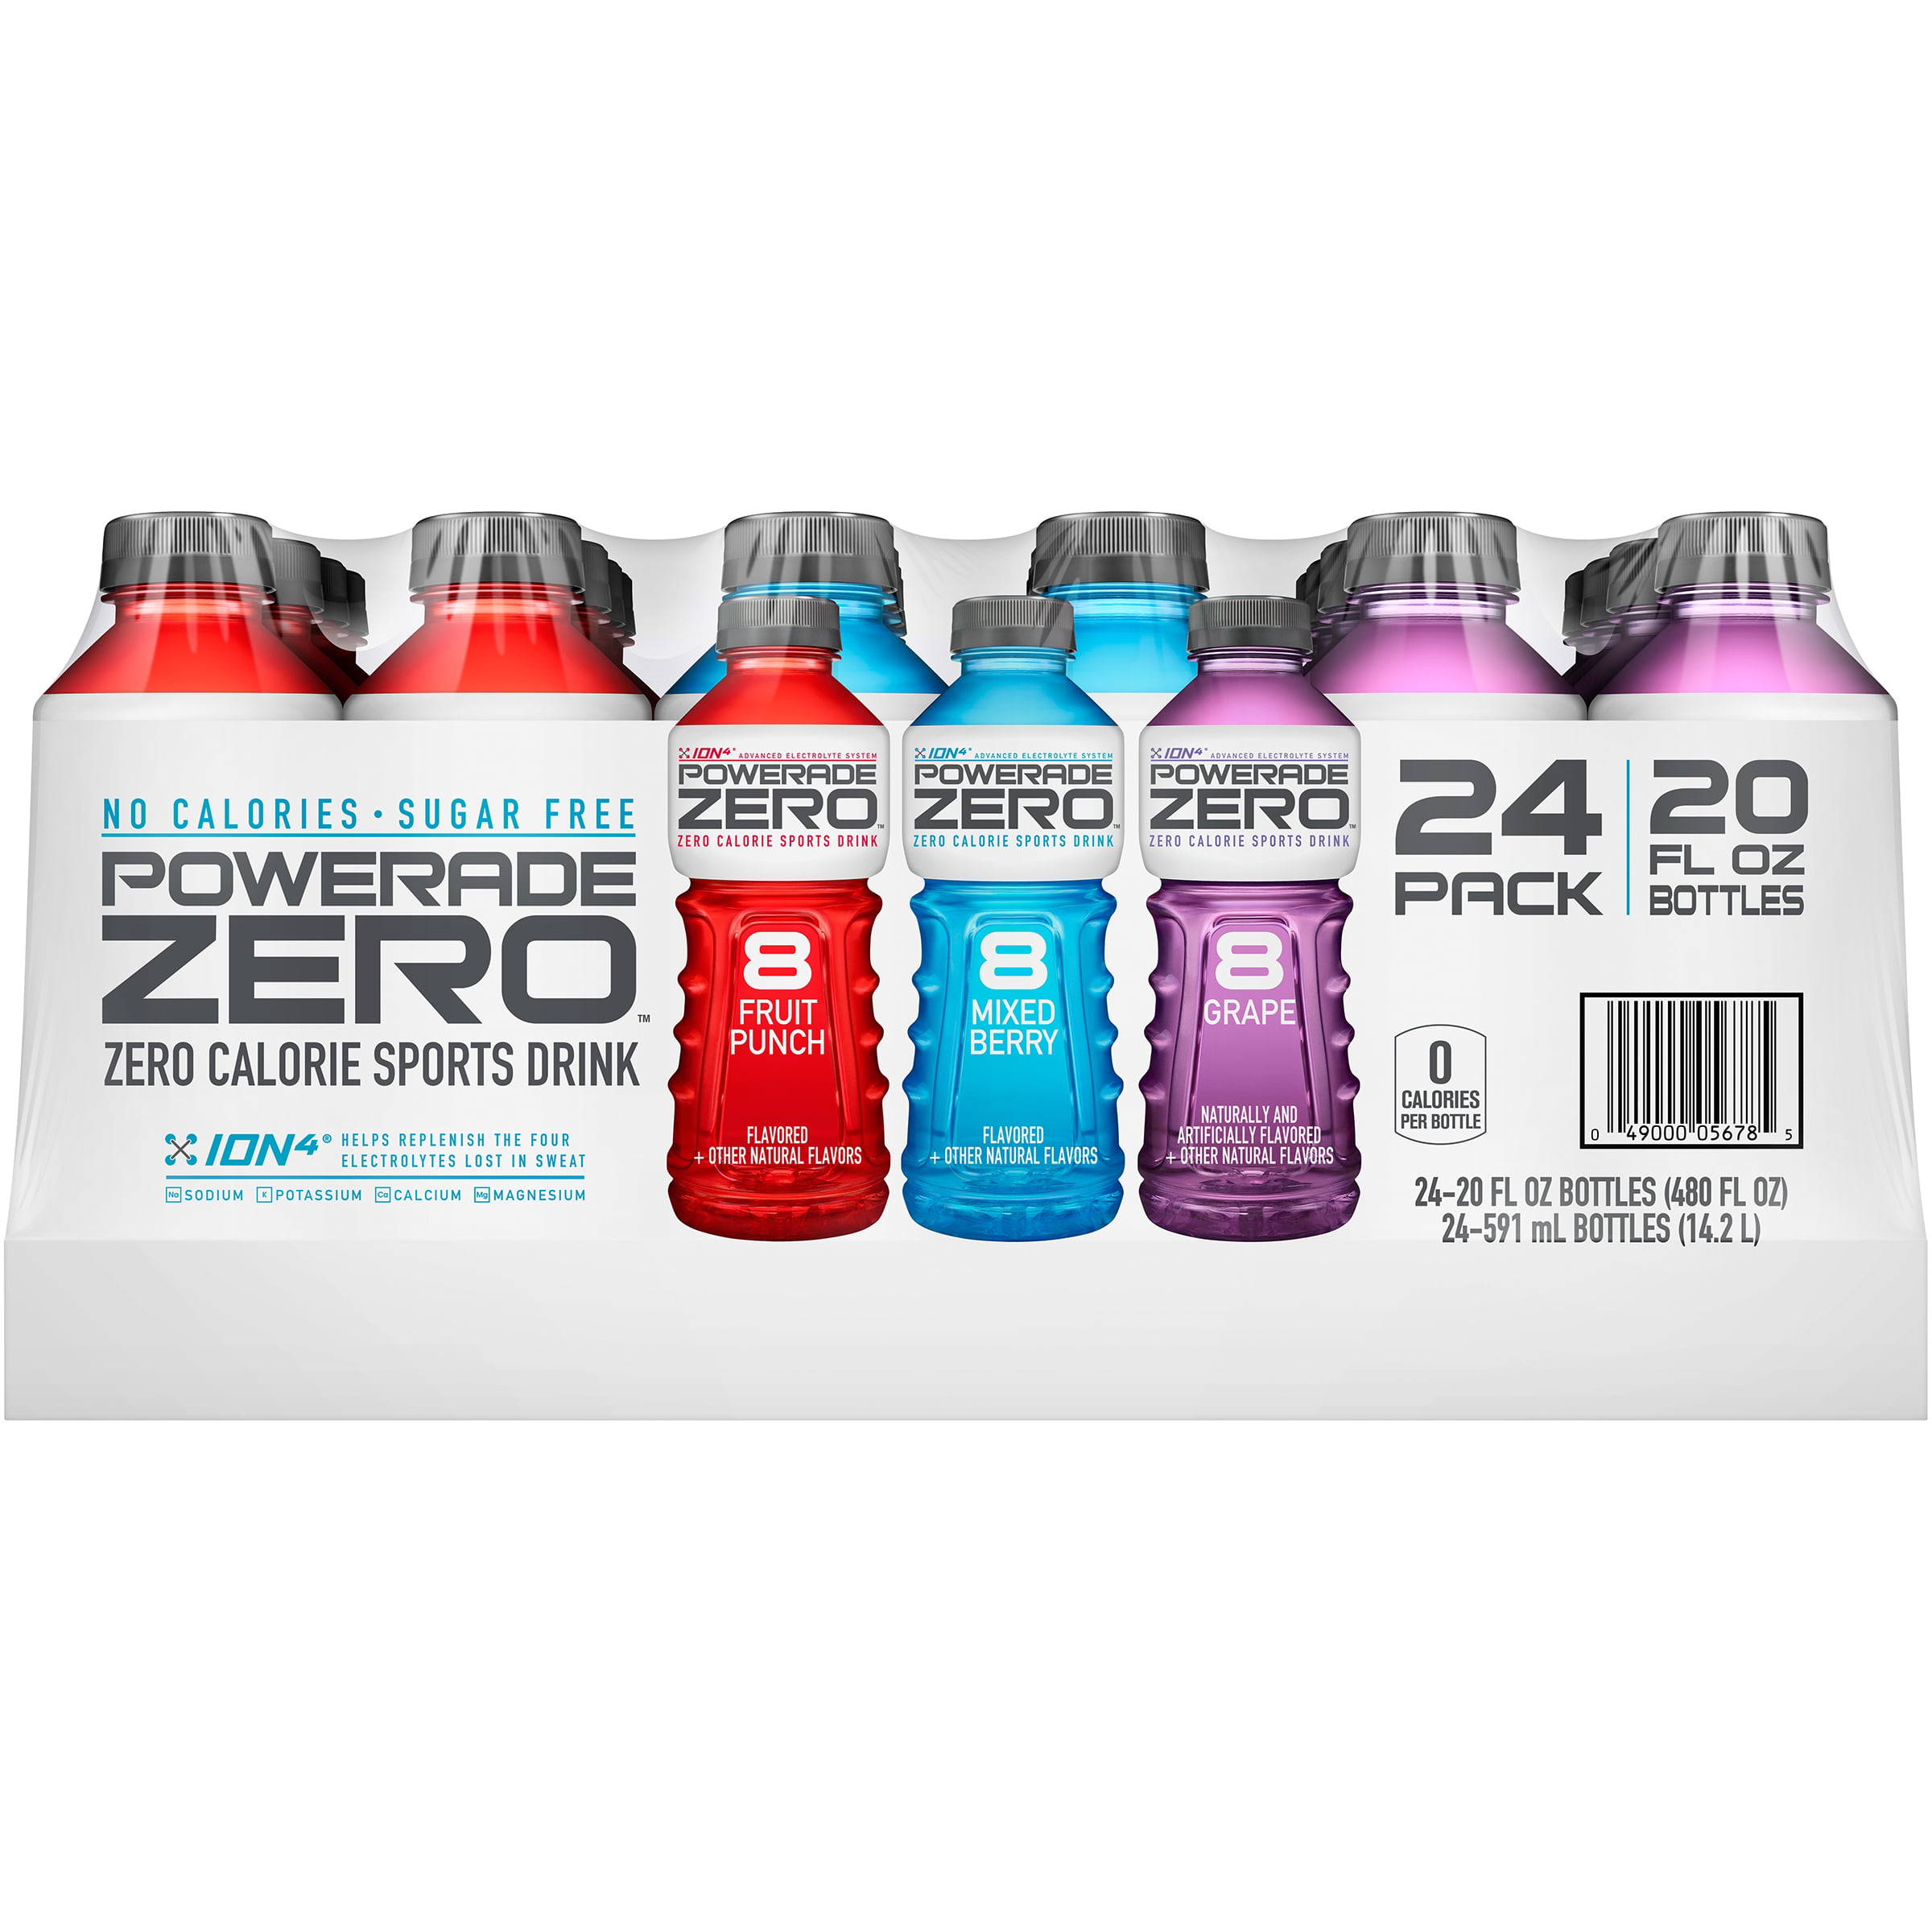 Powerade Zero Sports Drink, Variety Pack, 20 fl oz, 24 Bottles - Walmart.com